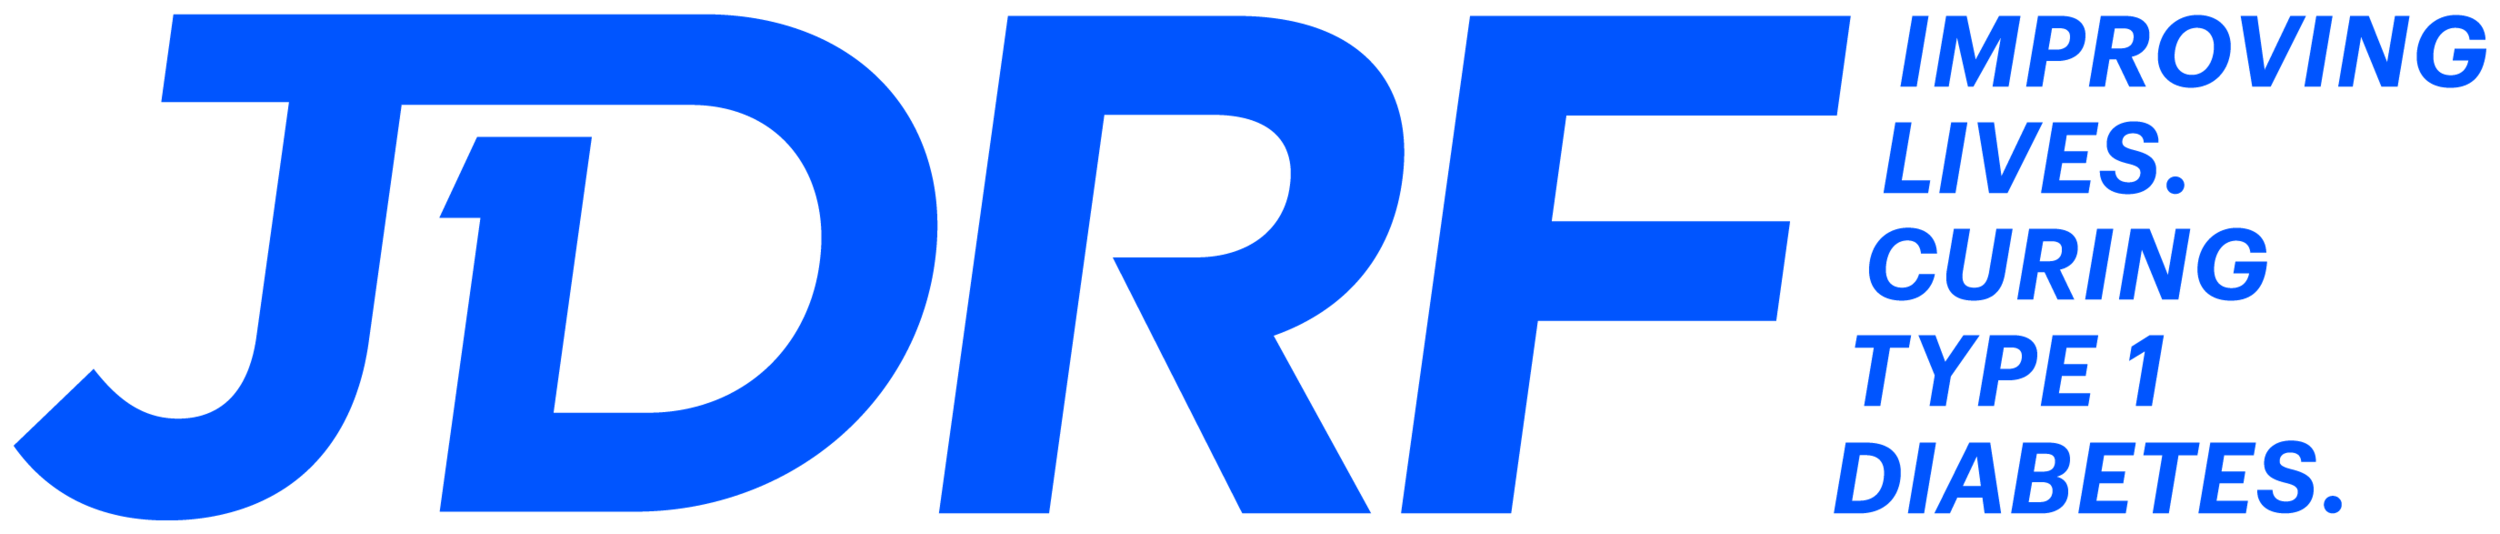 JDRF Logo Blue RGB 2019.png